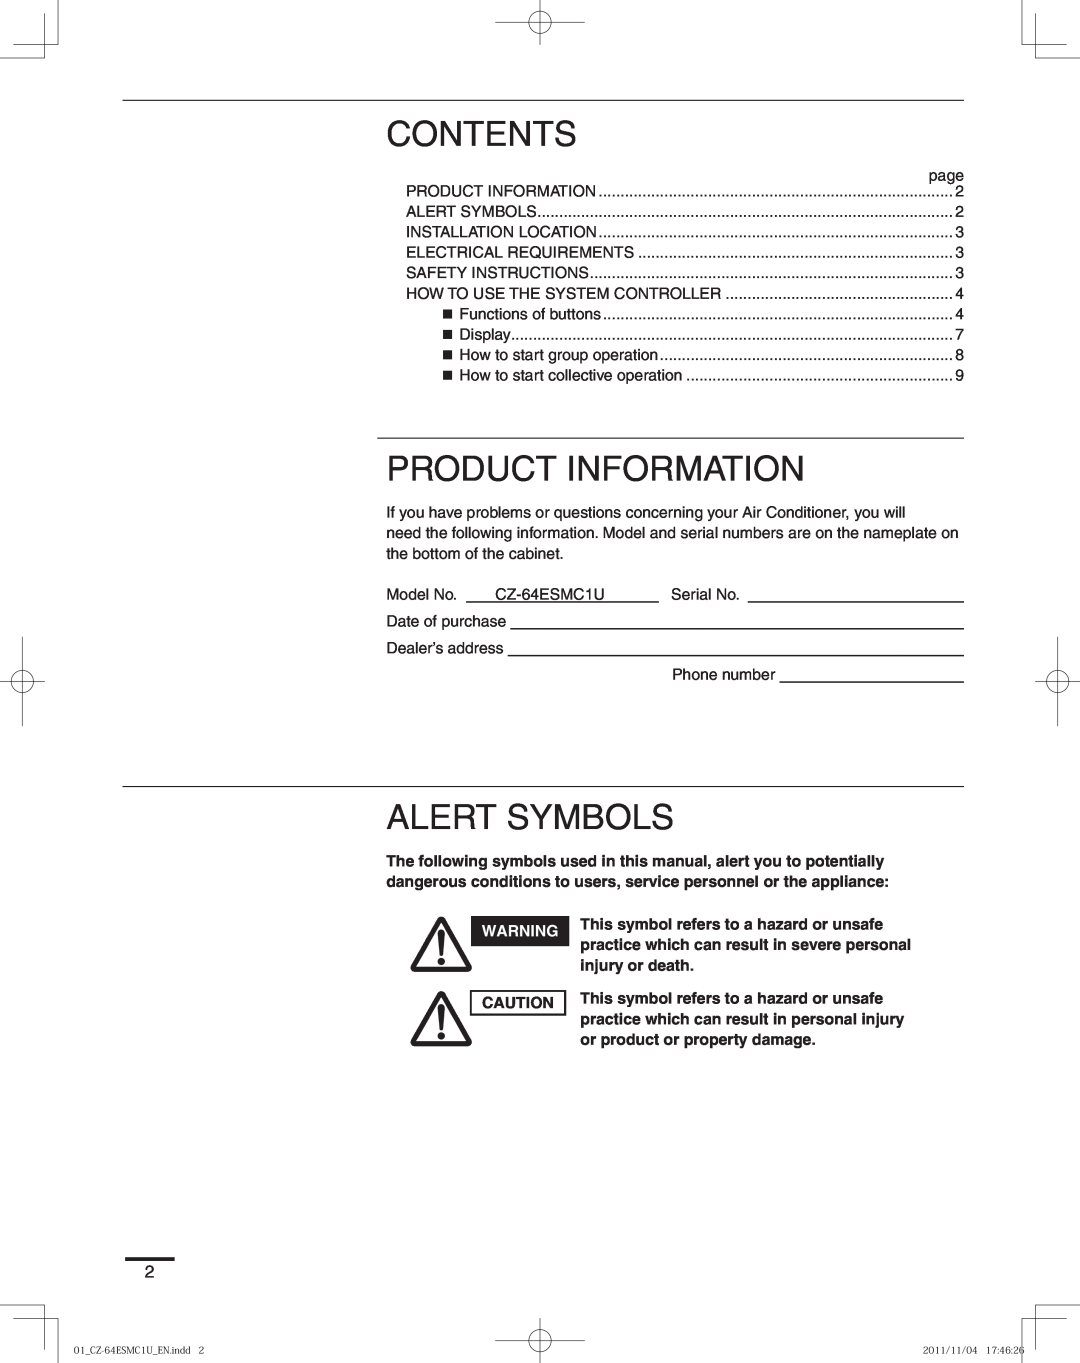 Panasonic CZ-64ESMC1U manual Contents, Product Information, Alert Symbols 